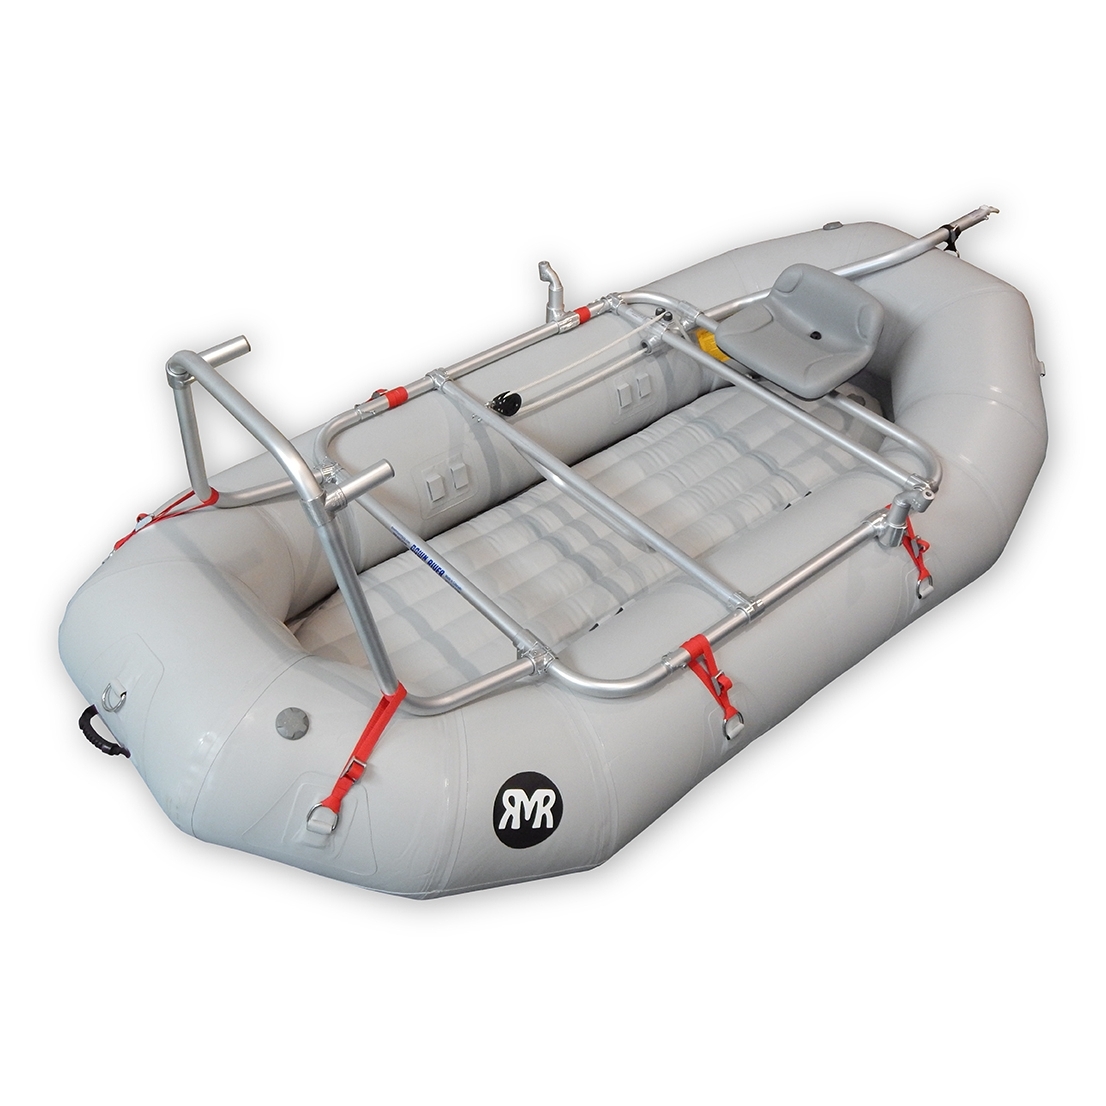 NRS Otter Inflatable Fishing Raft  River fishing, Kayaking gear, Rafting